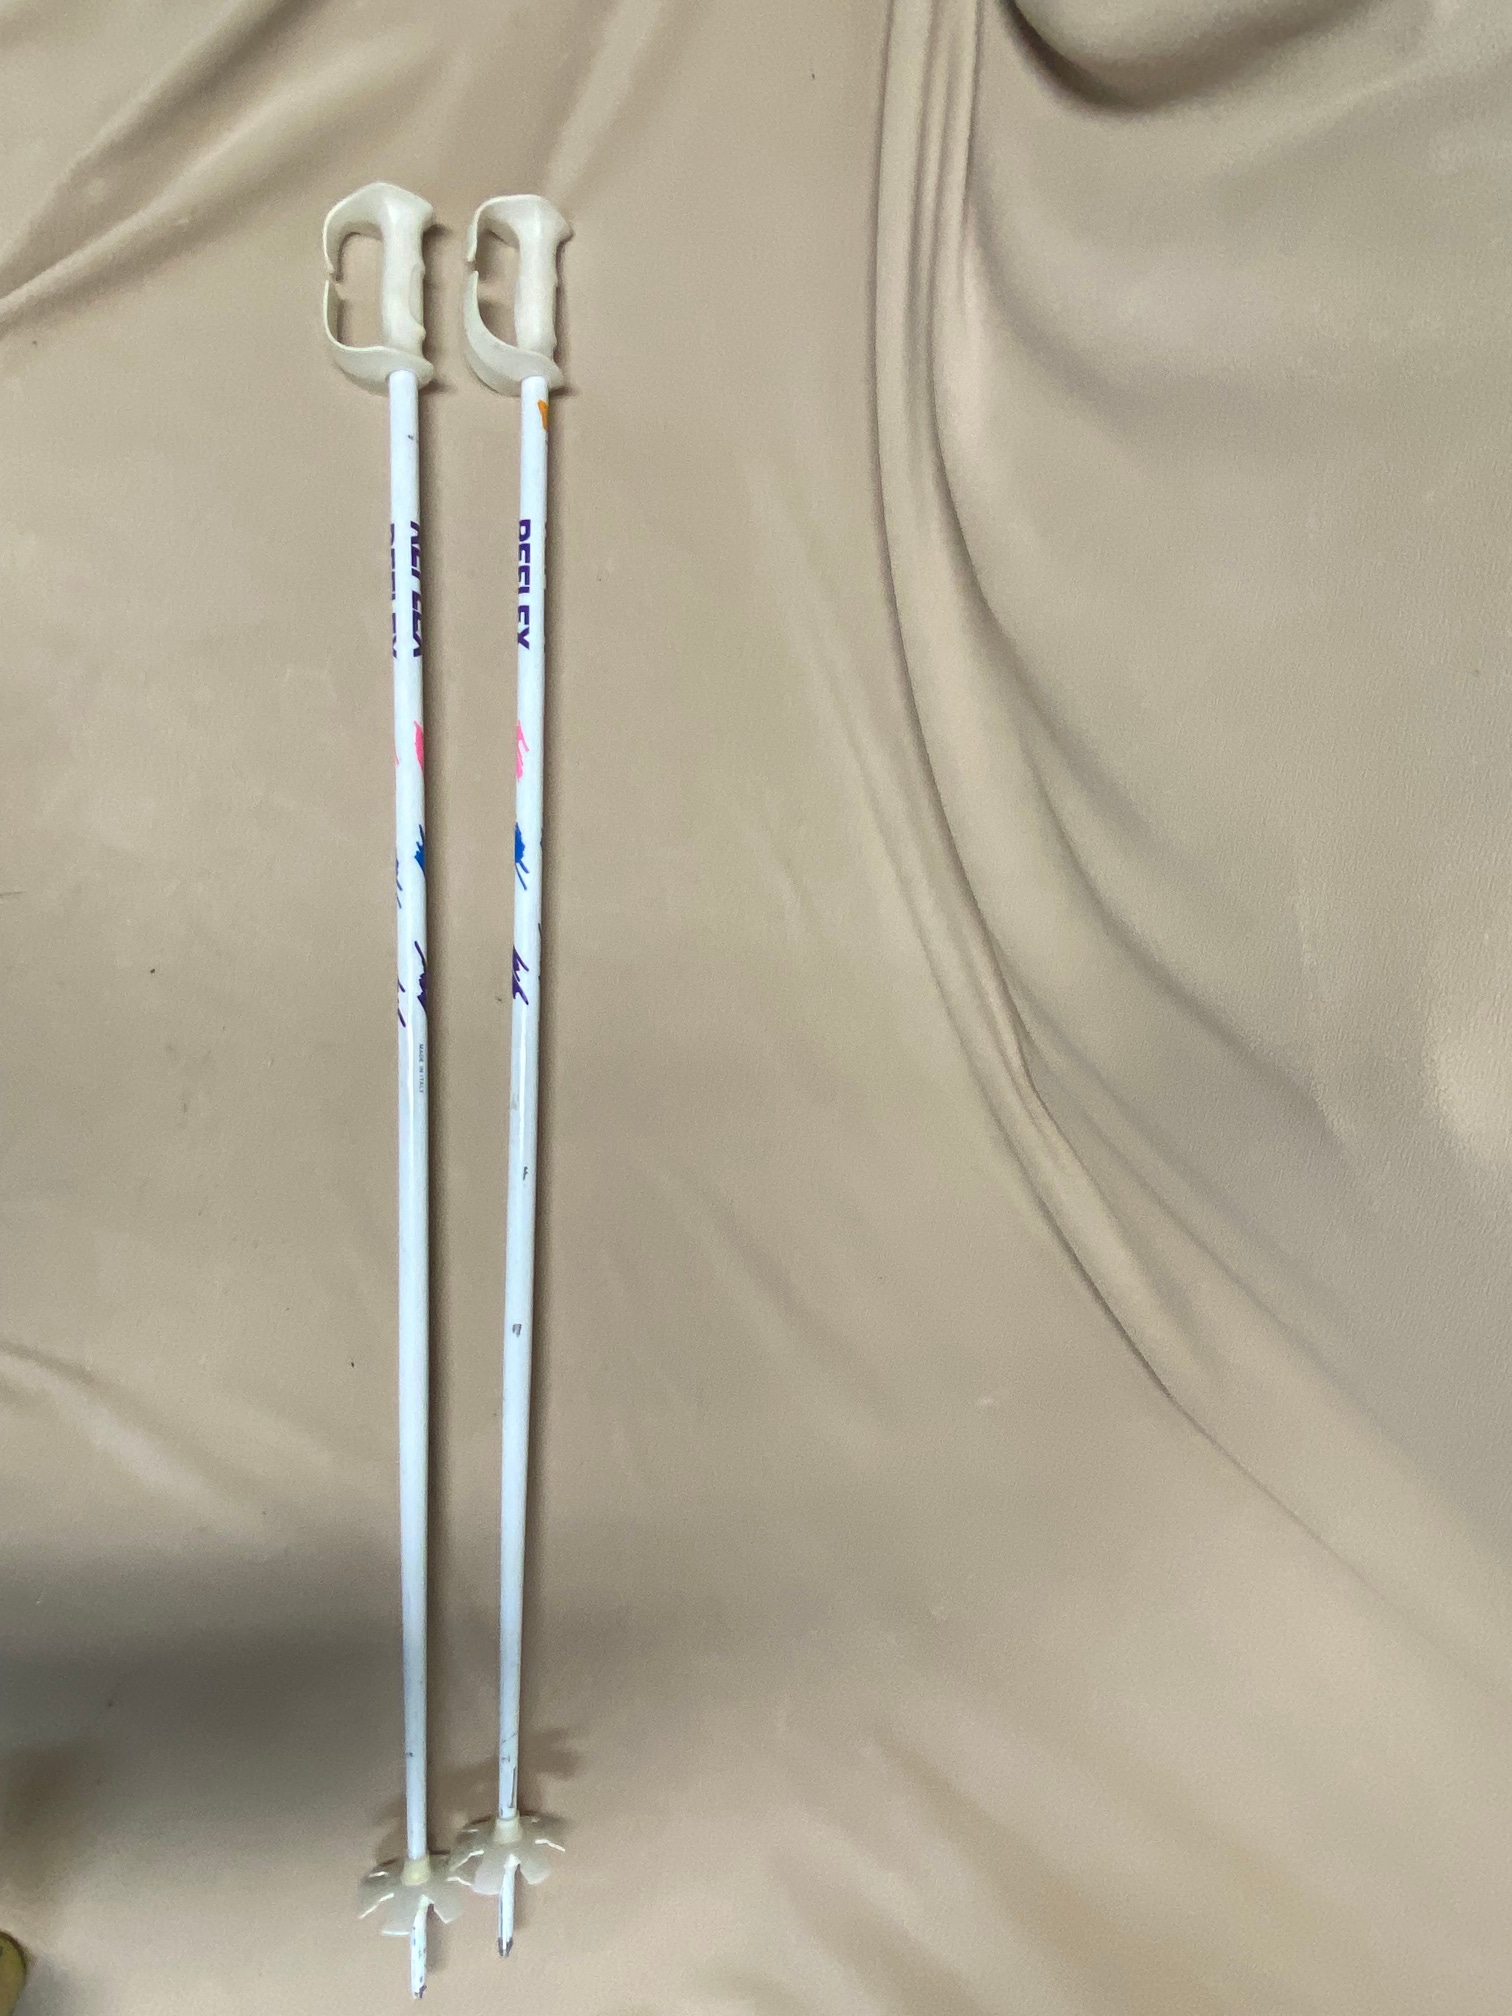 Used 48in (120cm) All Mountain Reflex Ski Poles